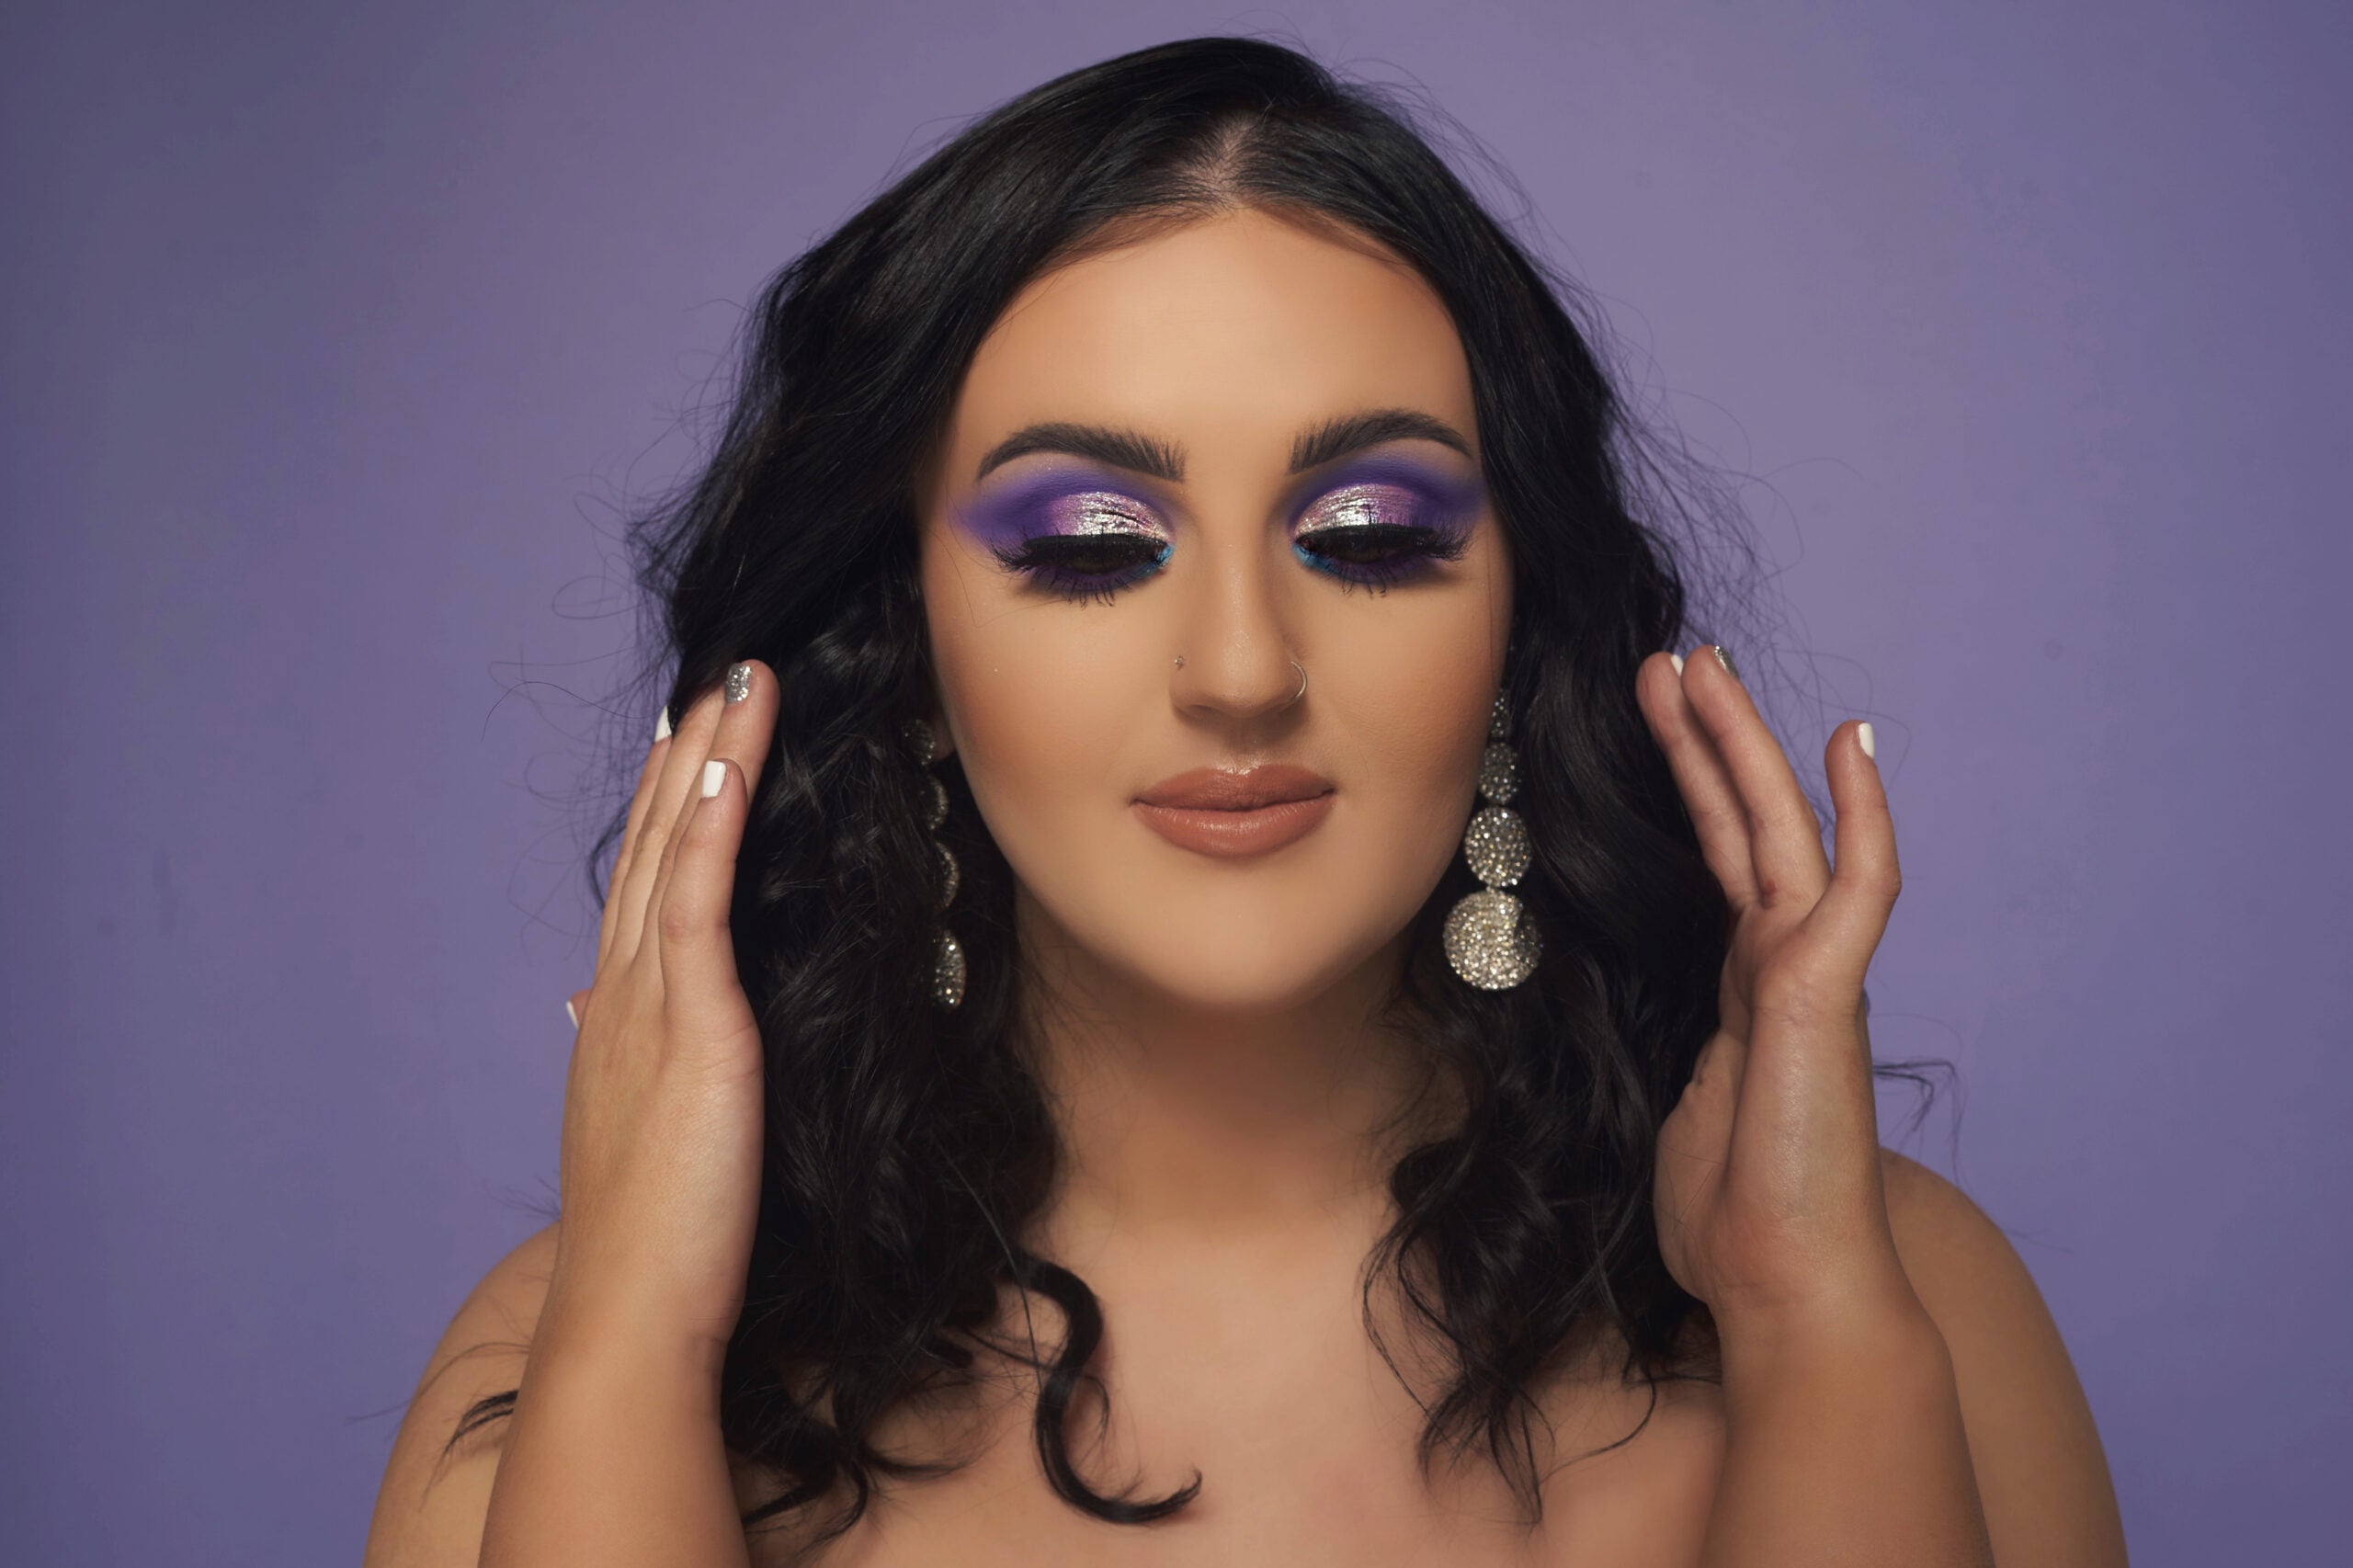 Woman hilariously applies makeup with tiny fake hands - ABC7 New York